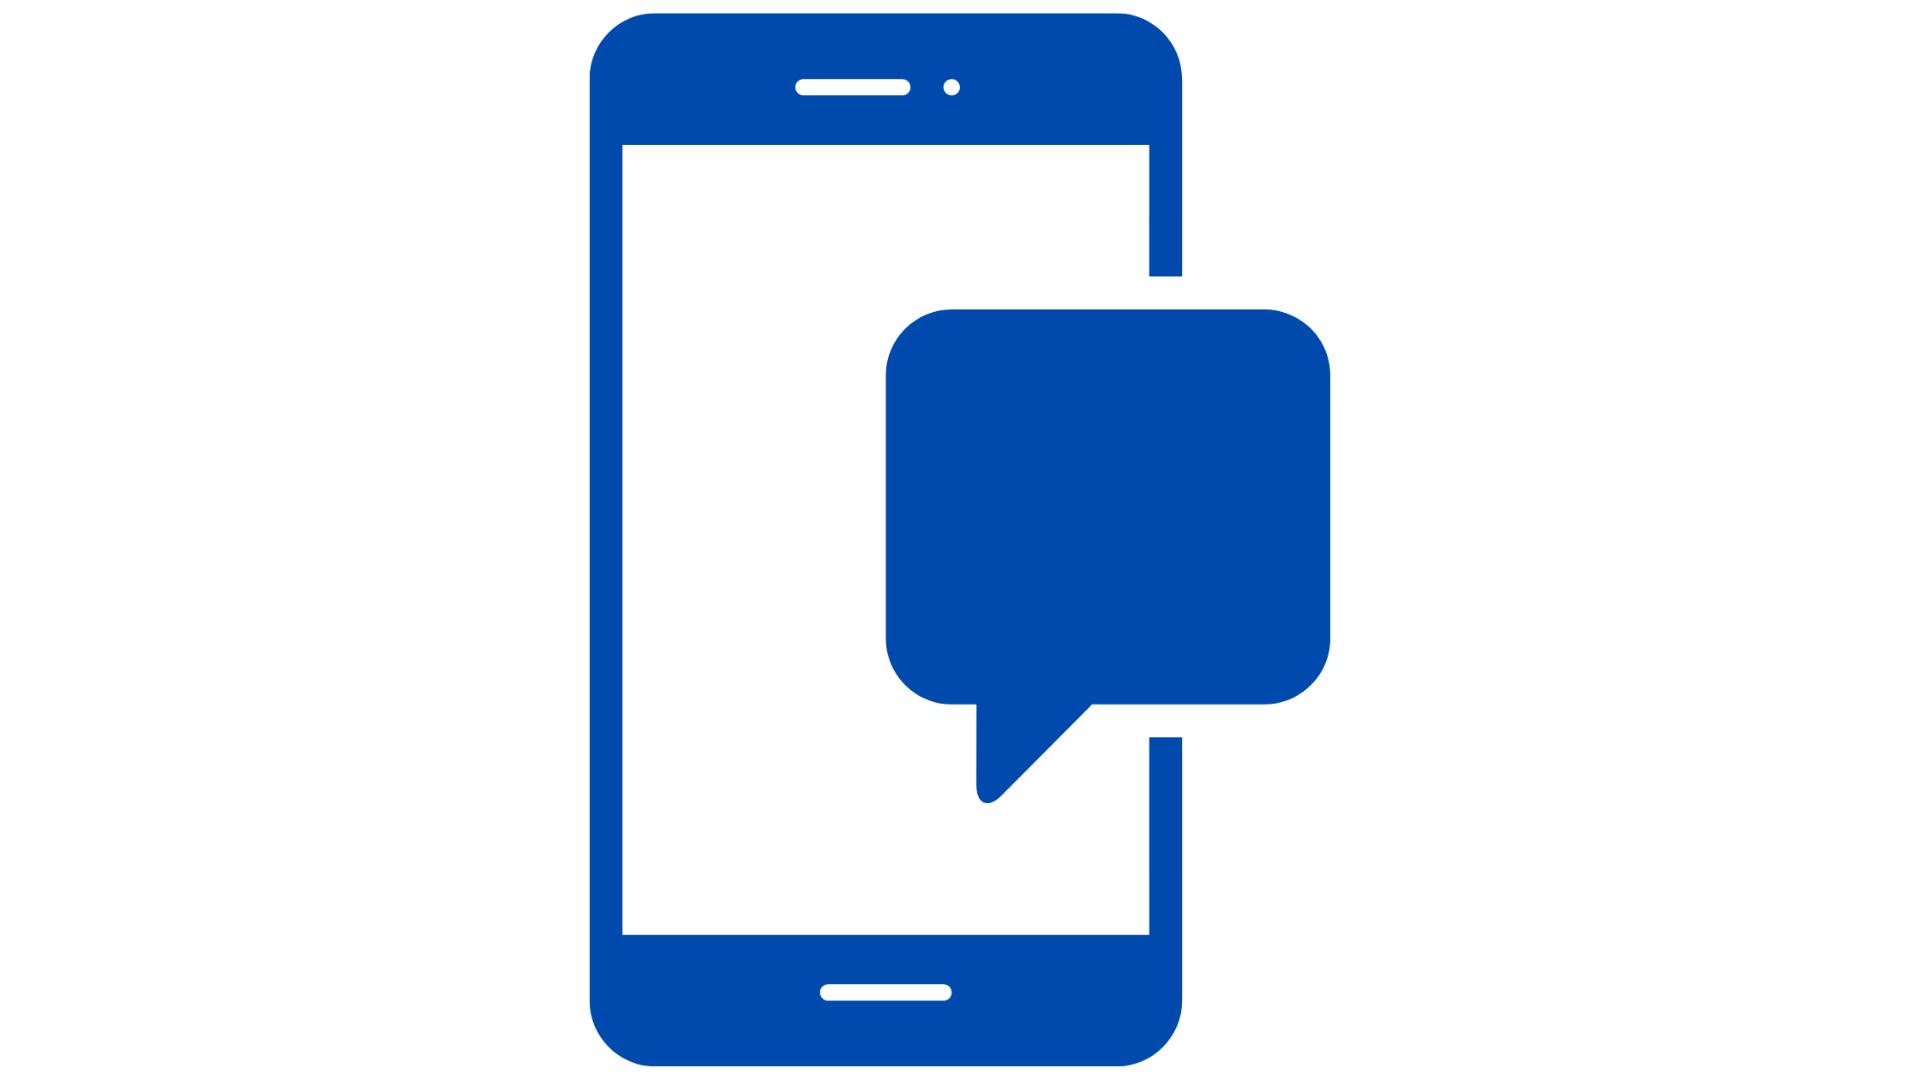 SMS on a phone